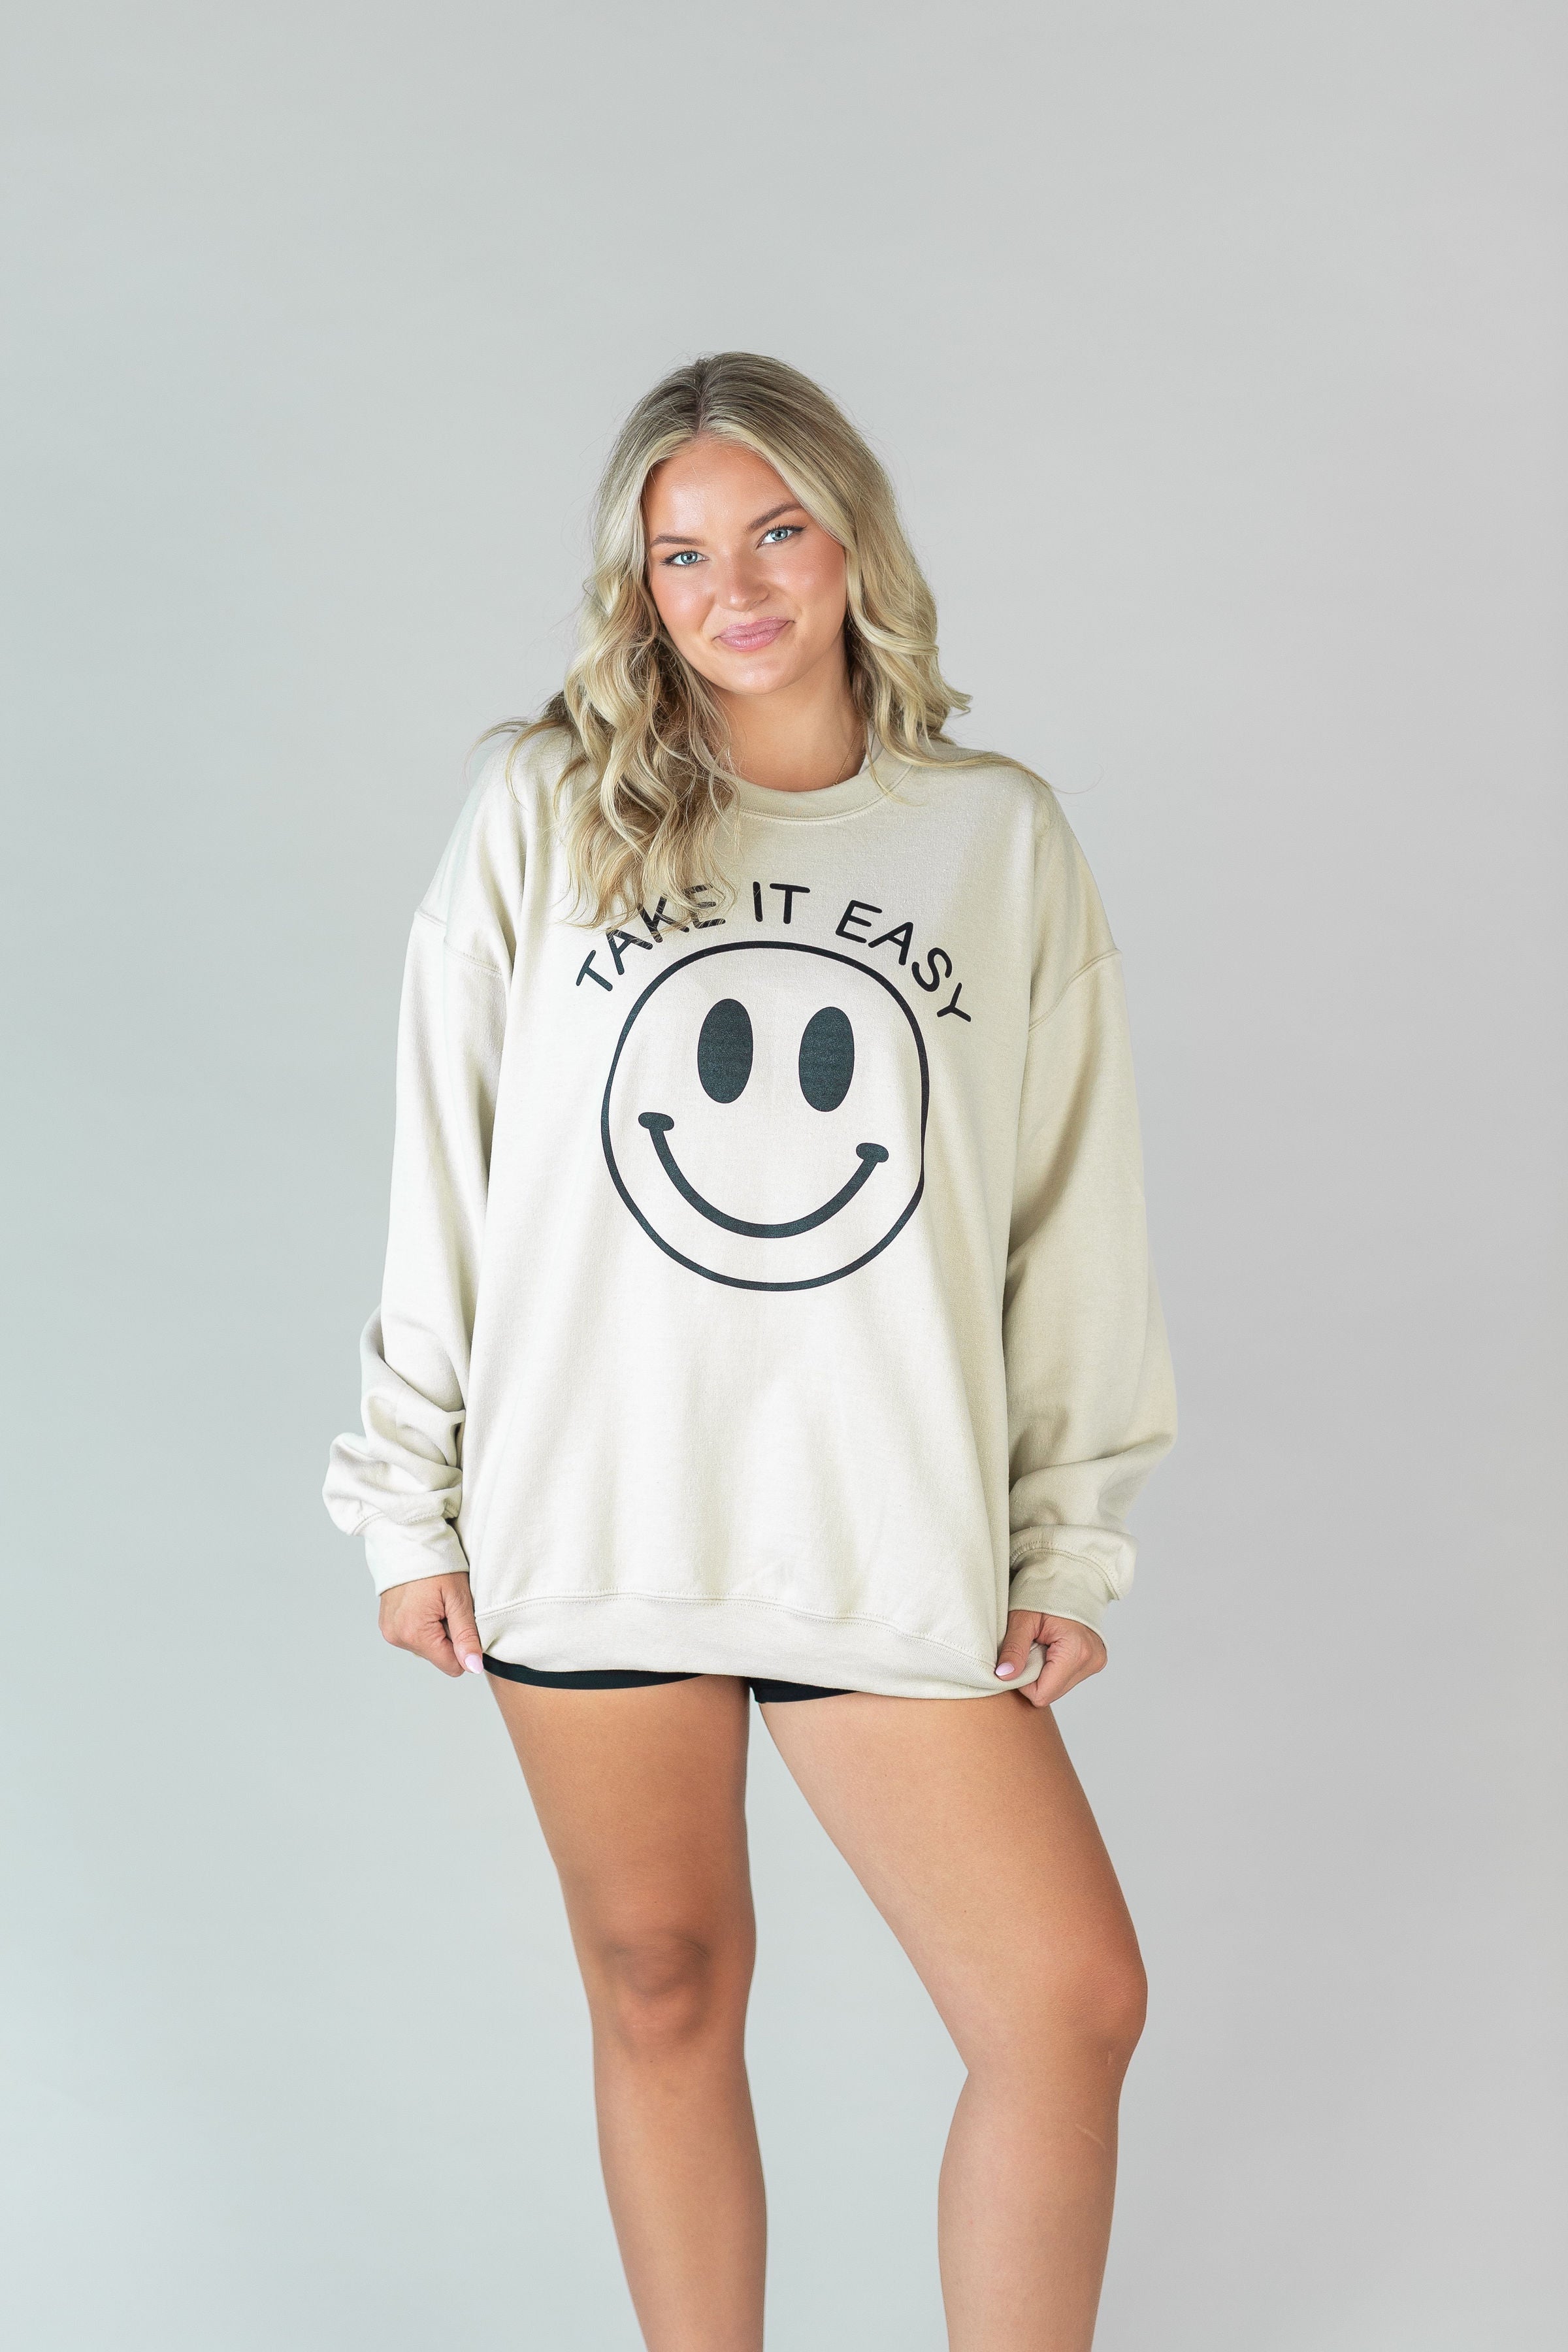 Take It Easy Tan Smiley Sweatshirt